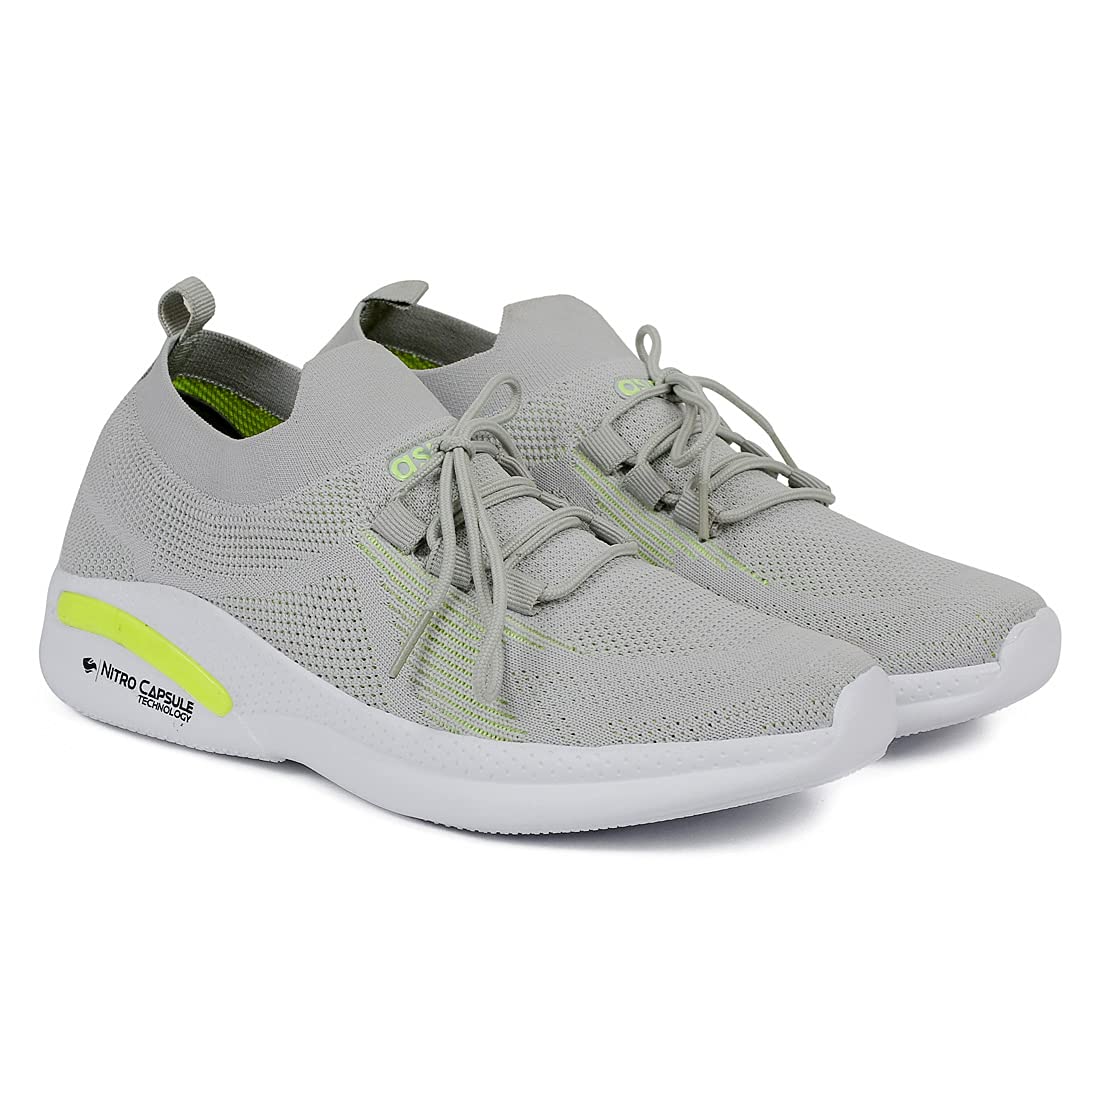 ASIAN Hattrick-21 Men's Sport Shoes, Ideal for Running, Walking & Gym